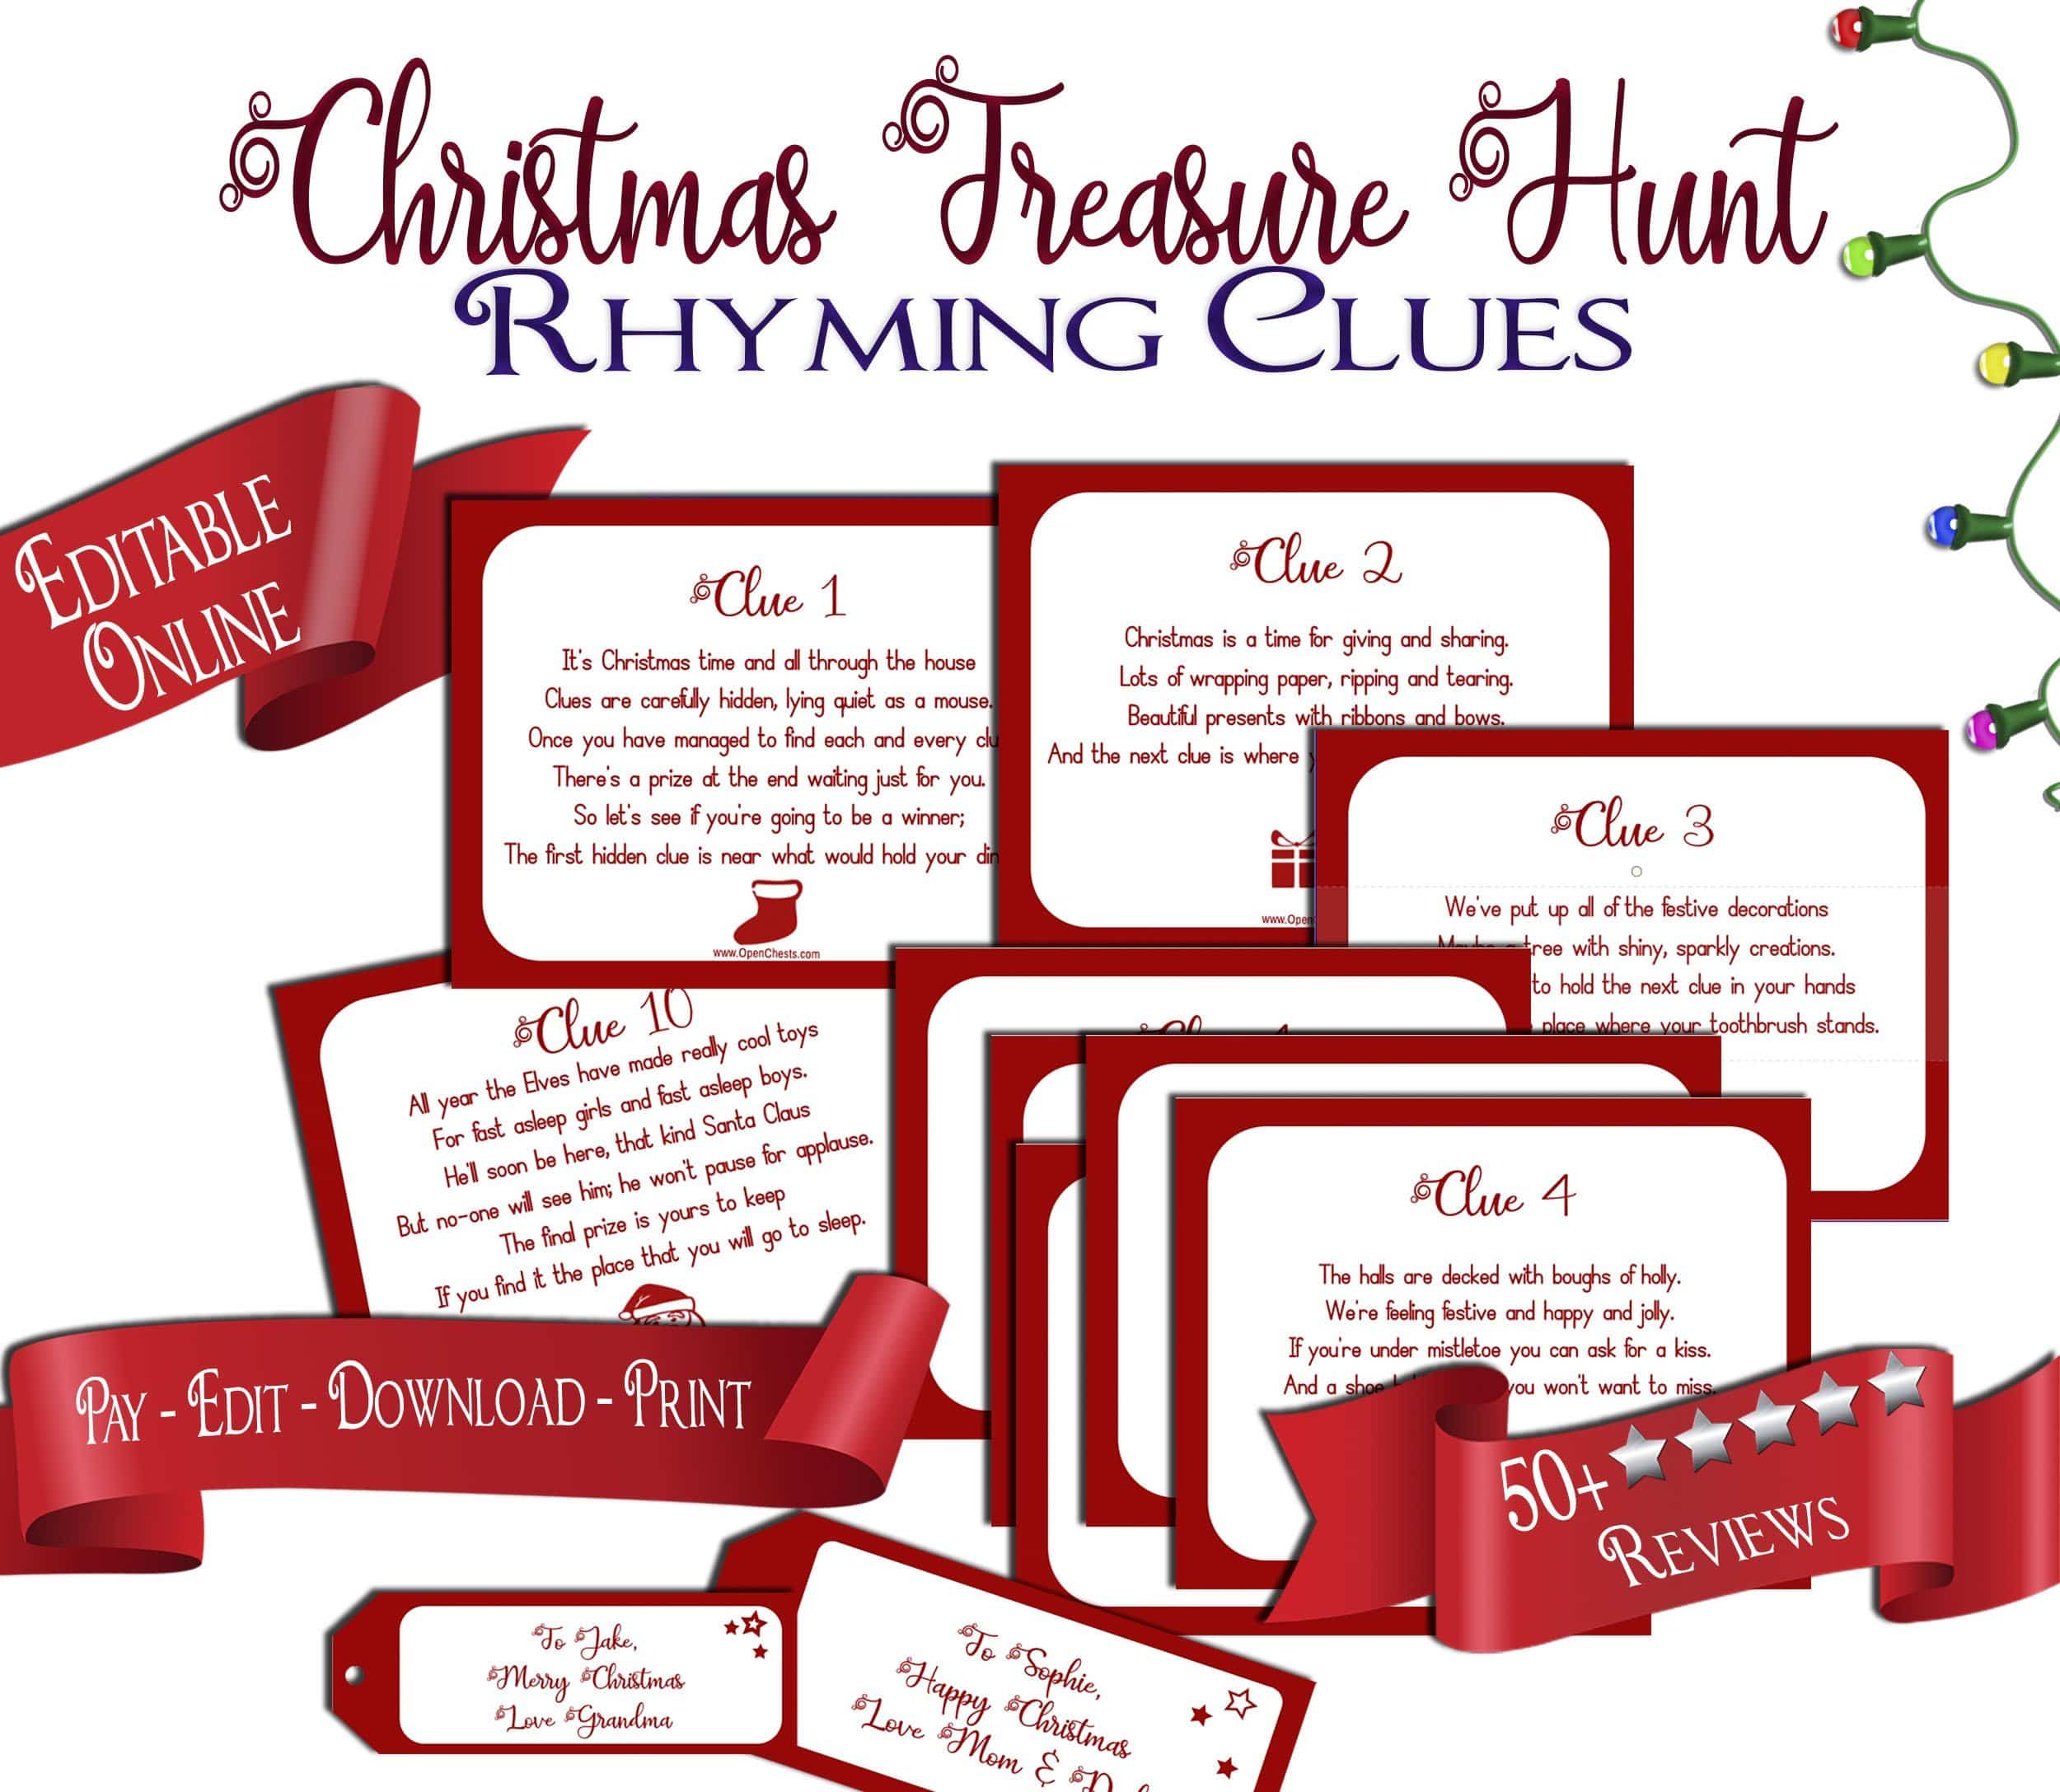 Indoor Christmas Treasure Hunt Clues Printable Scavenger Children Game – Open Chests